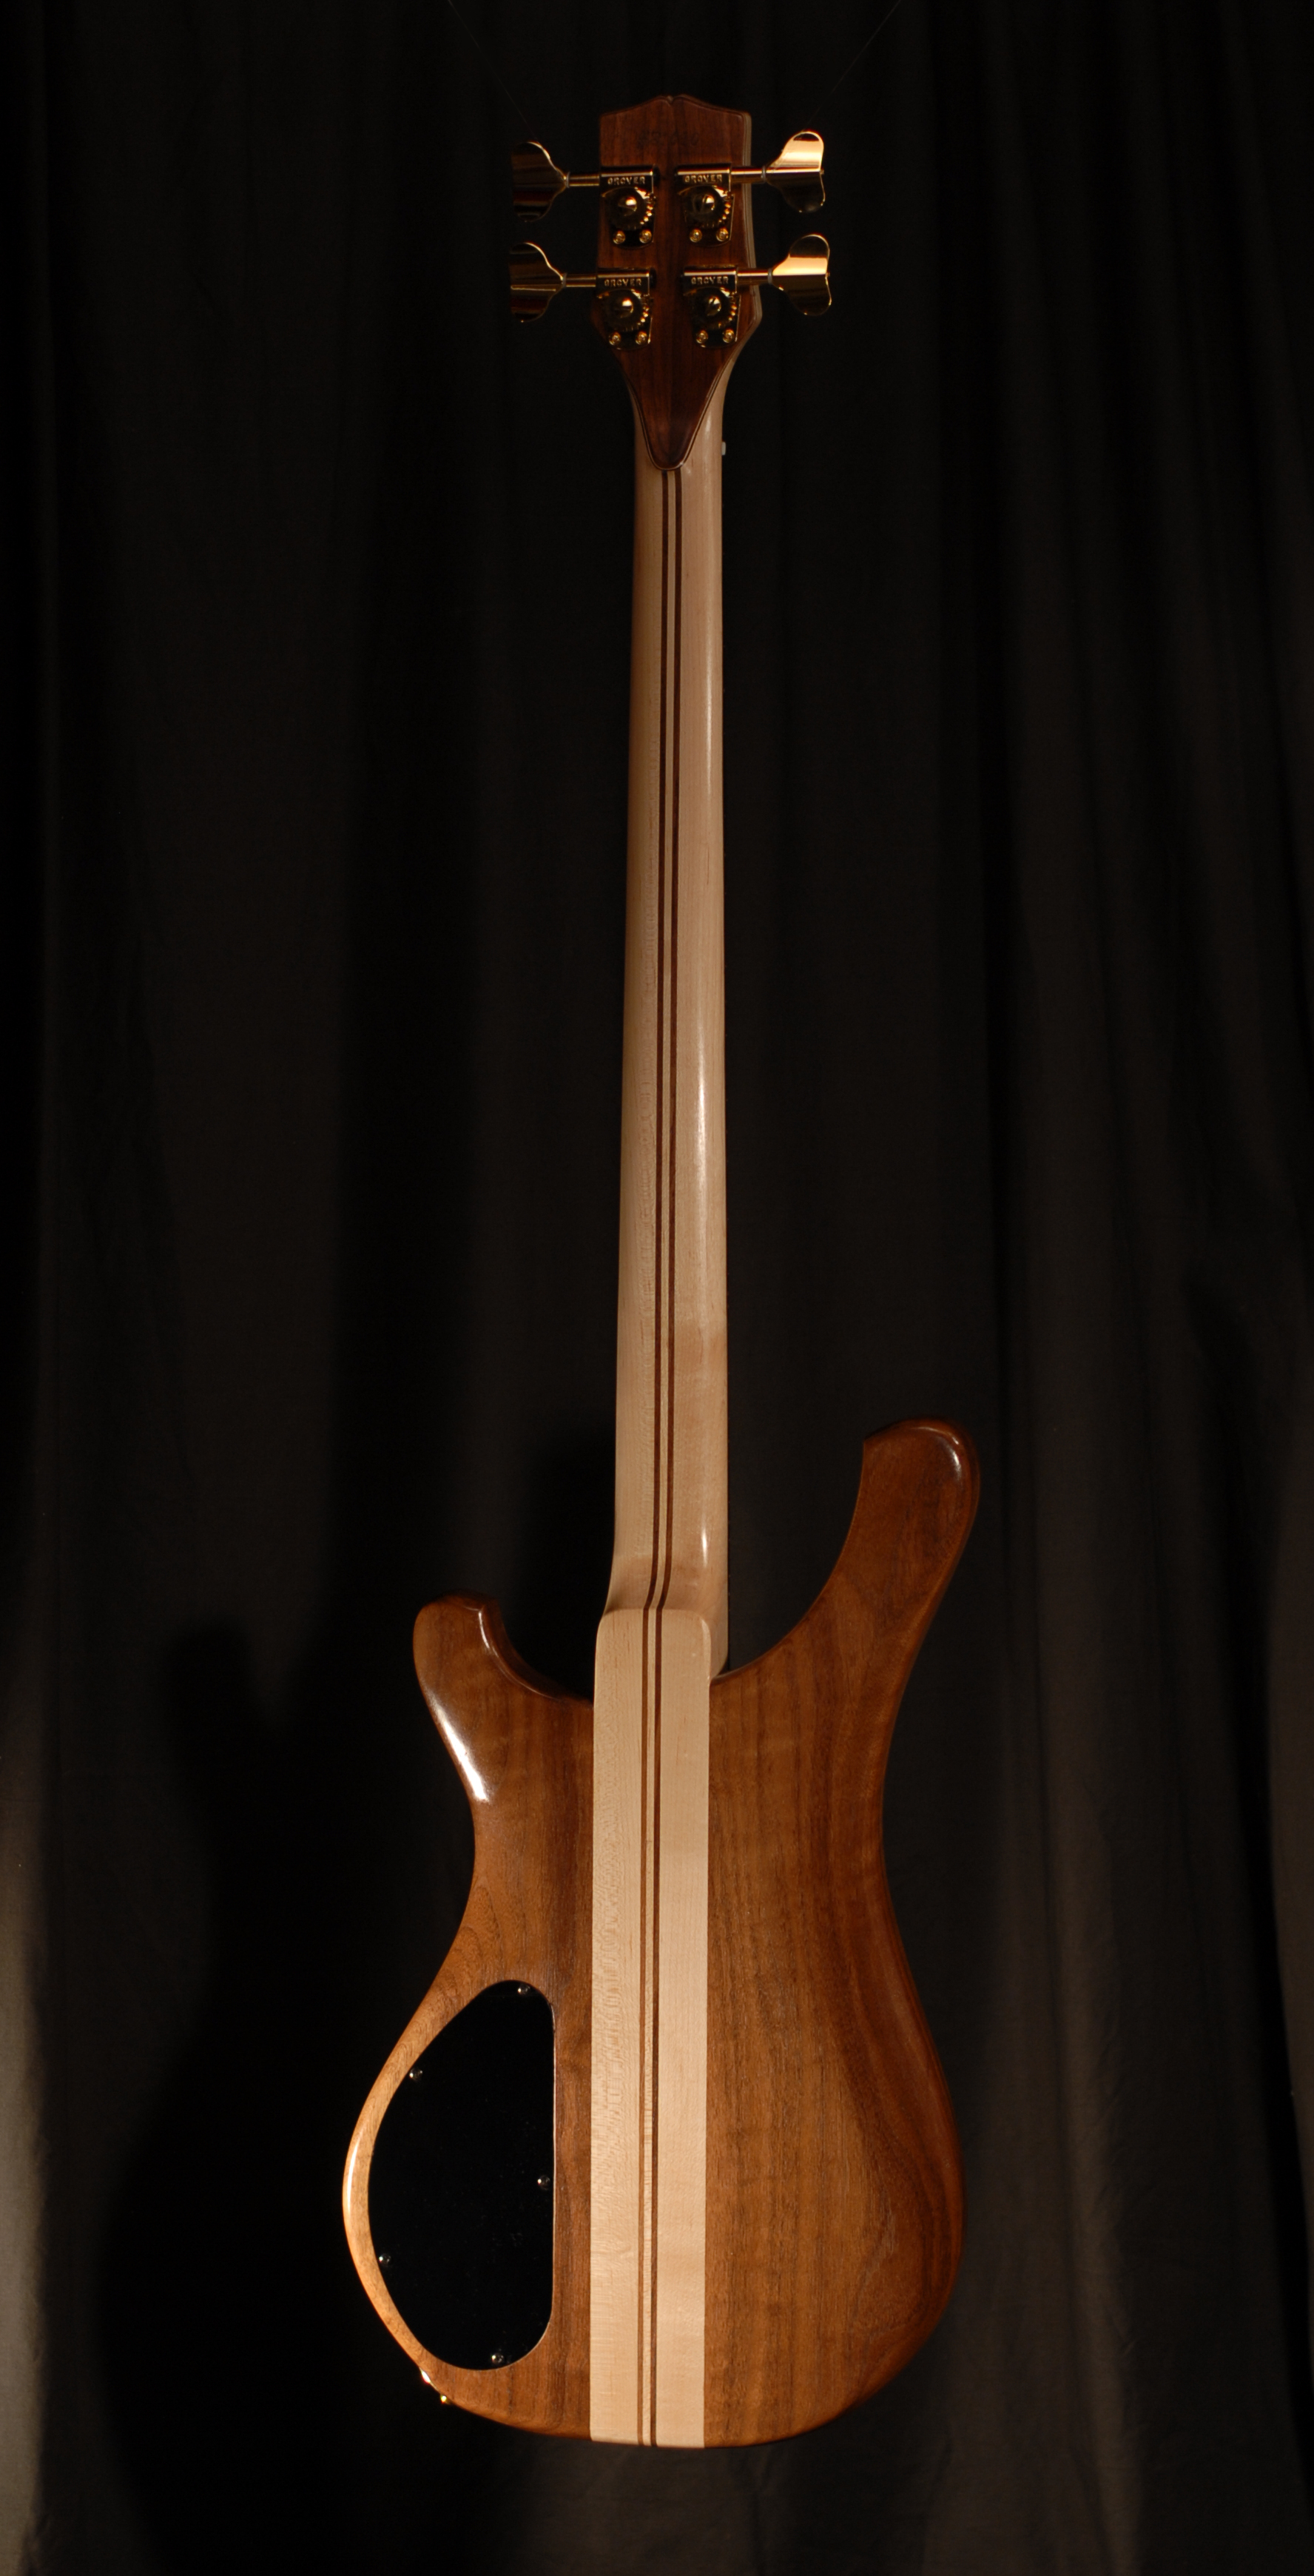 rear view of michael mccarten's double cutaway electric bass guitar model